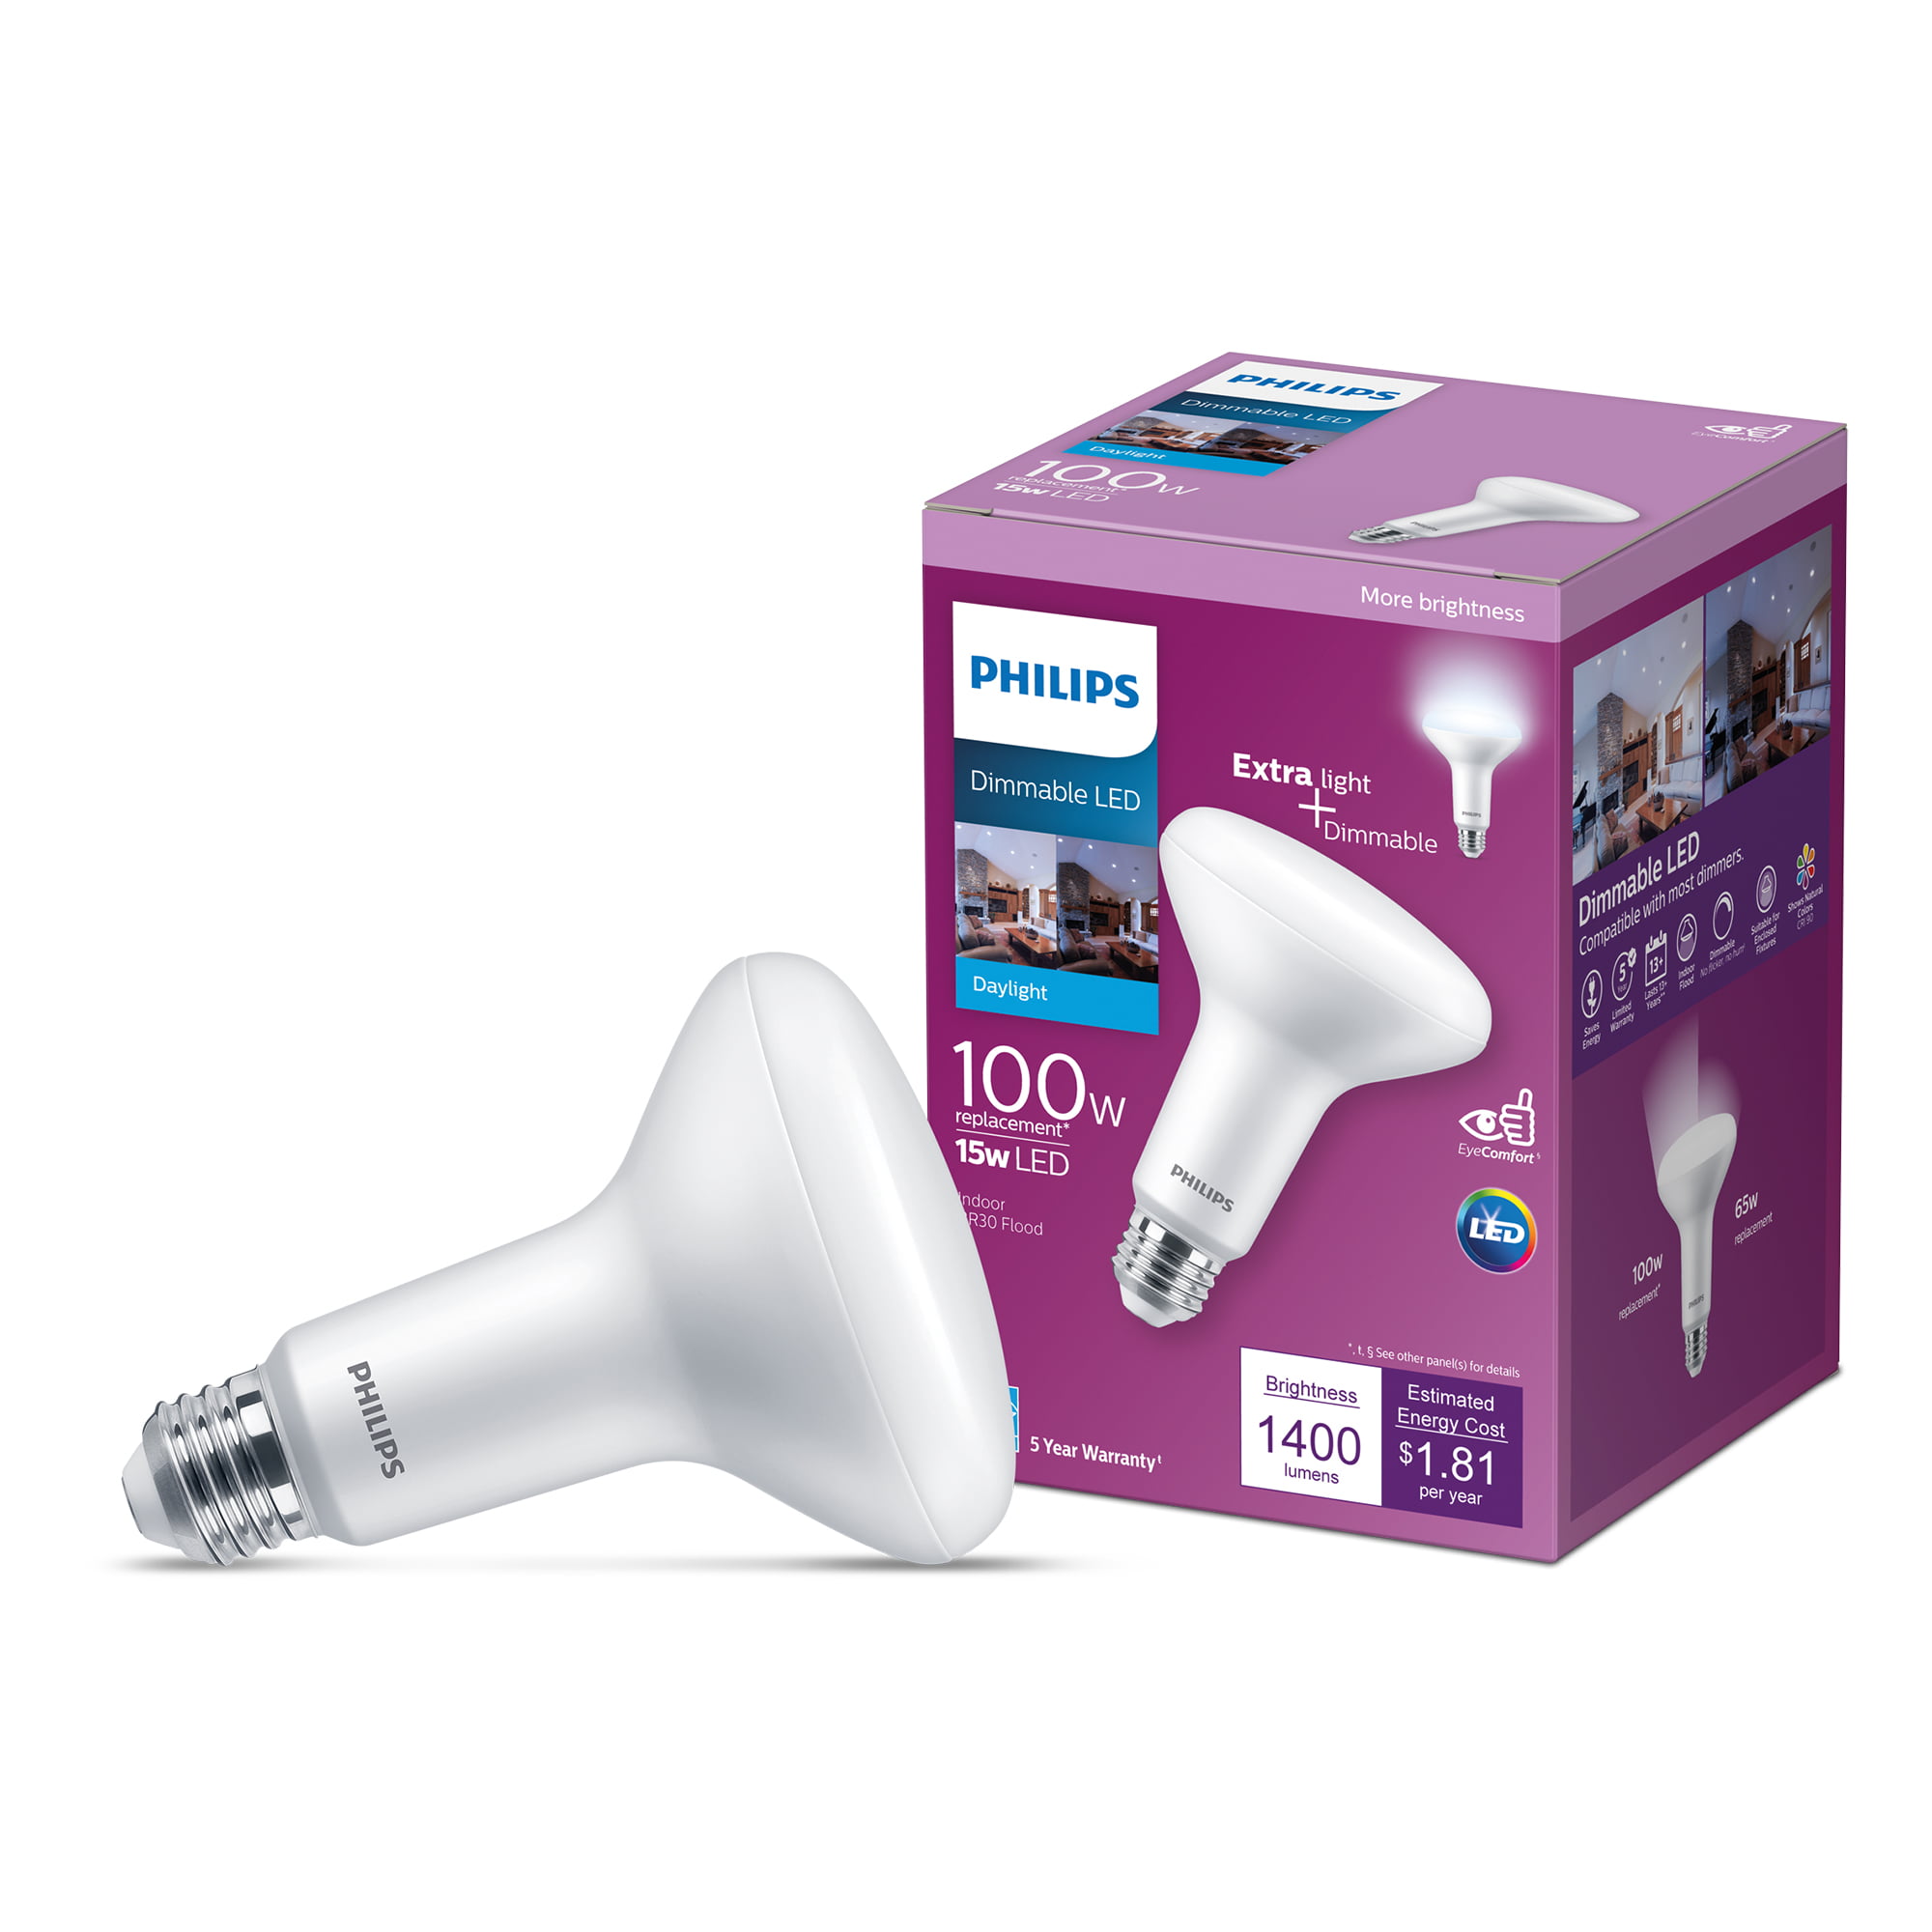 Fejde strække Chip Philips LED 100-Watt BR30 Indoor & Outdoor Floodlight Light Bulb, Frosted  Daylight, Dimmable, E26 Medium Base, 5-Inch Recessed Can (1-Pack) -  Walmart.com